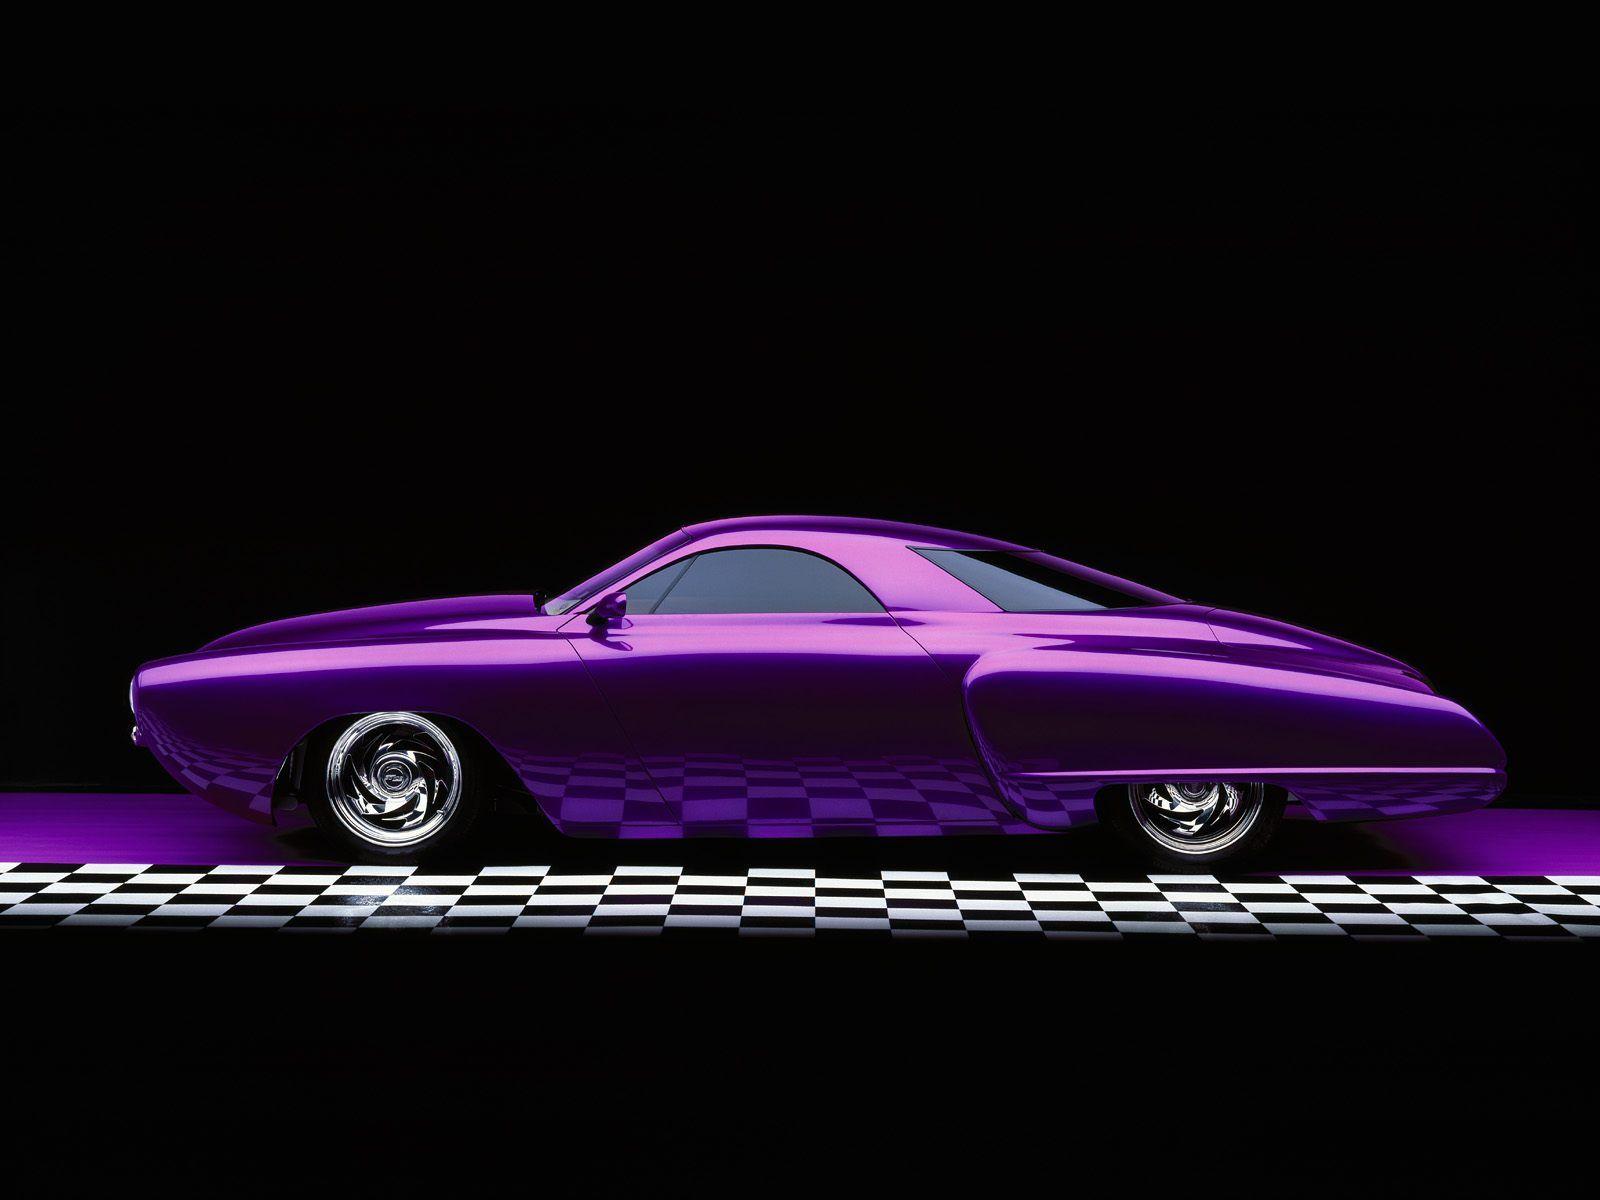 A Very cool purple car I love the sleek design. PURPLE!!!. Cars